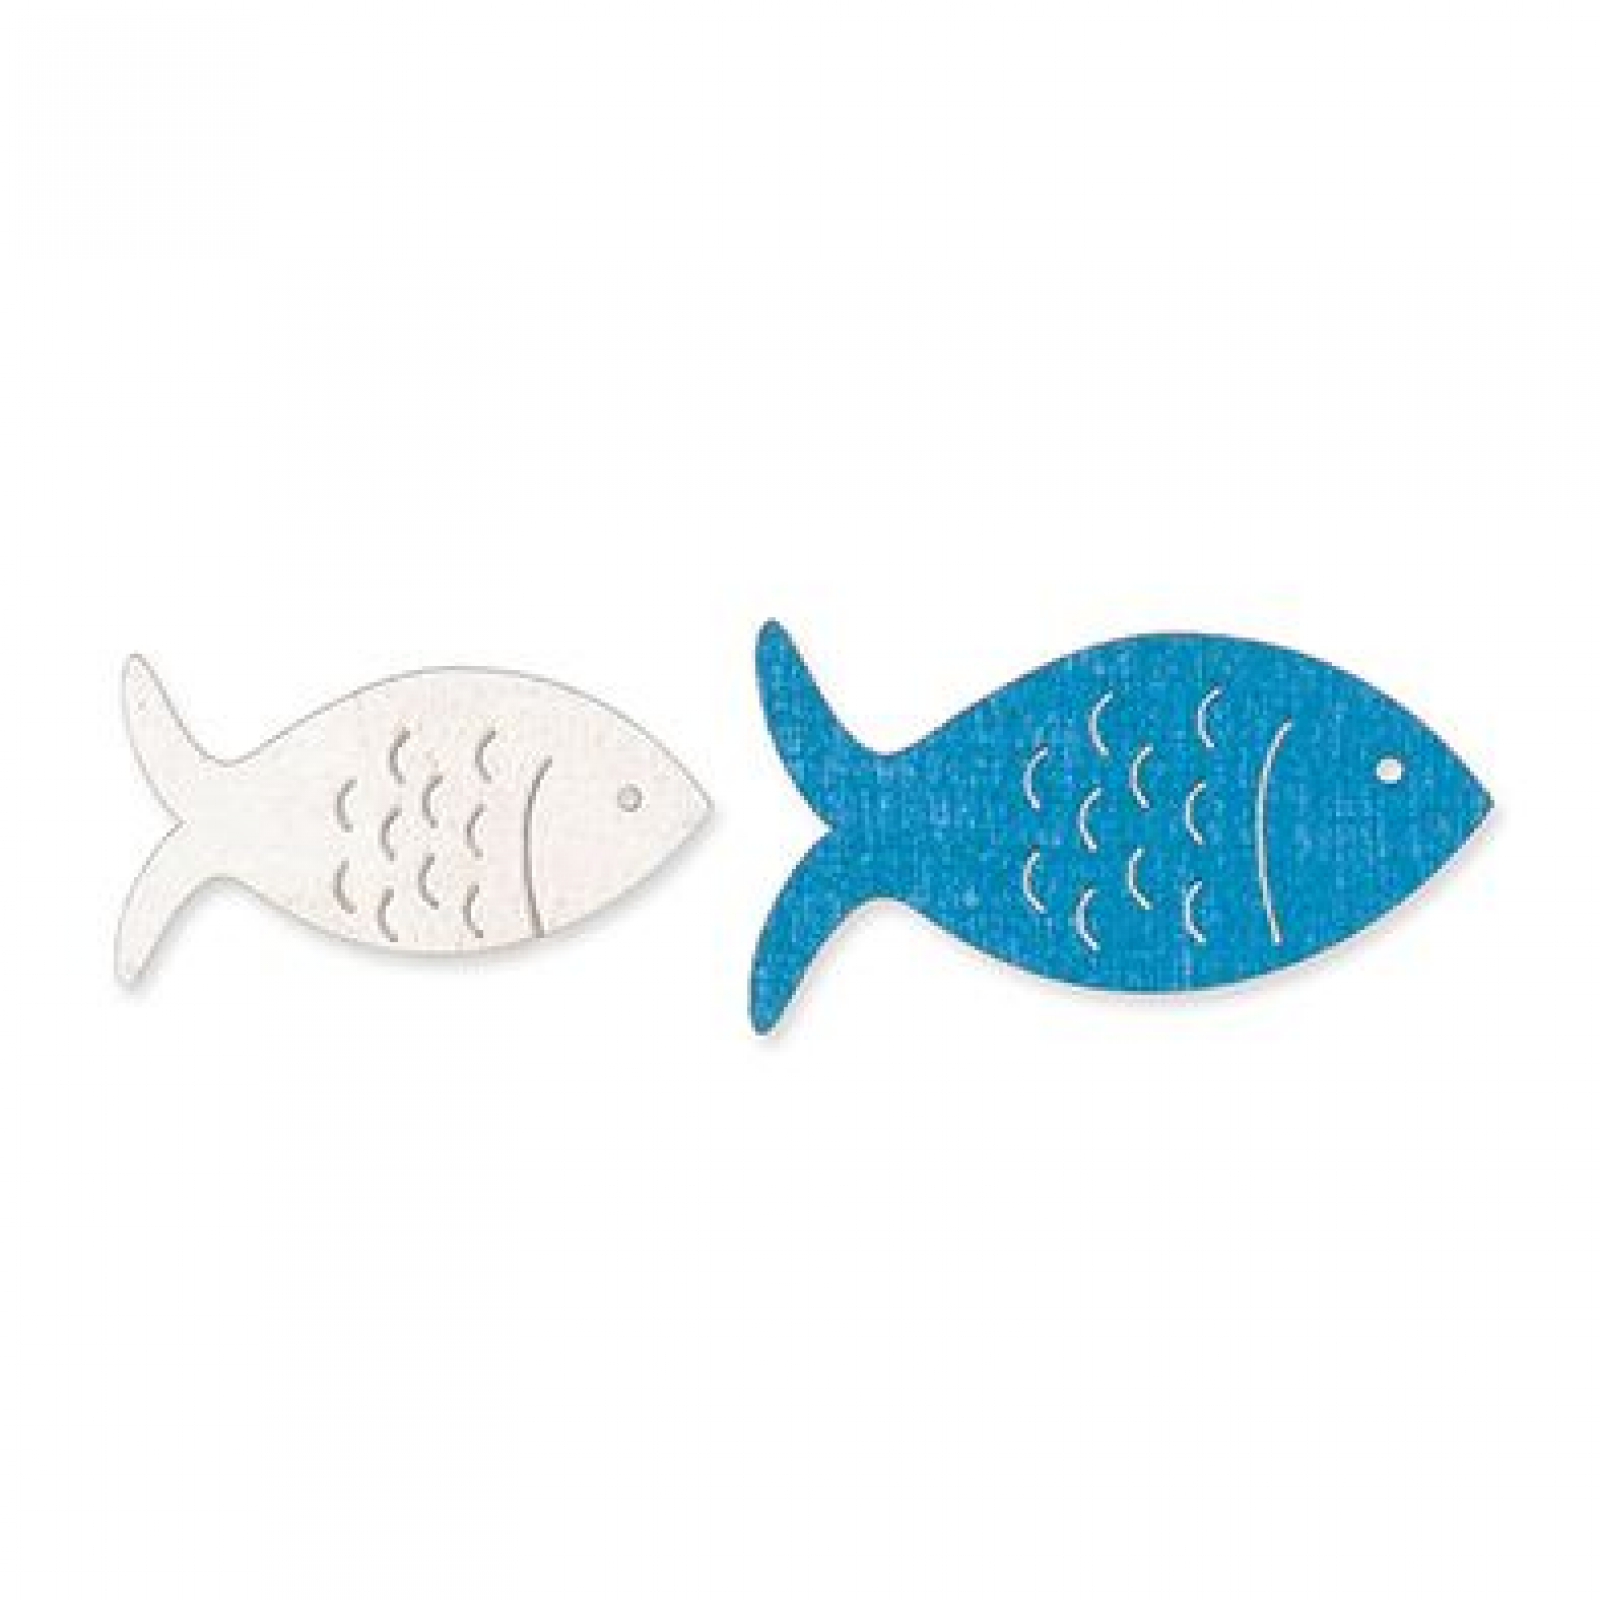 Holz-Streudeko Fish" 4 pb x 12 pcs blue/white 4x2cm/5x2,5cm 22537-000-103"